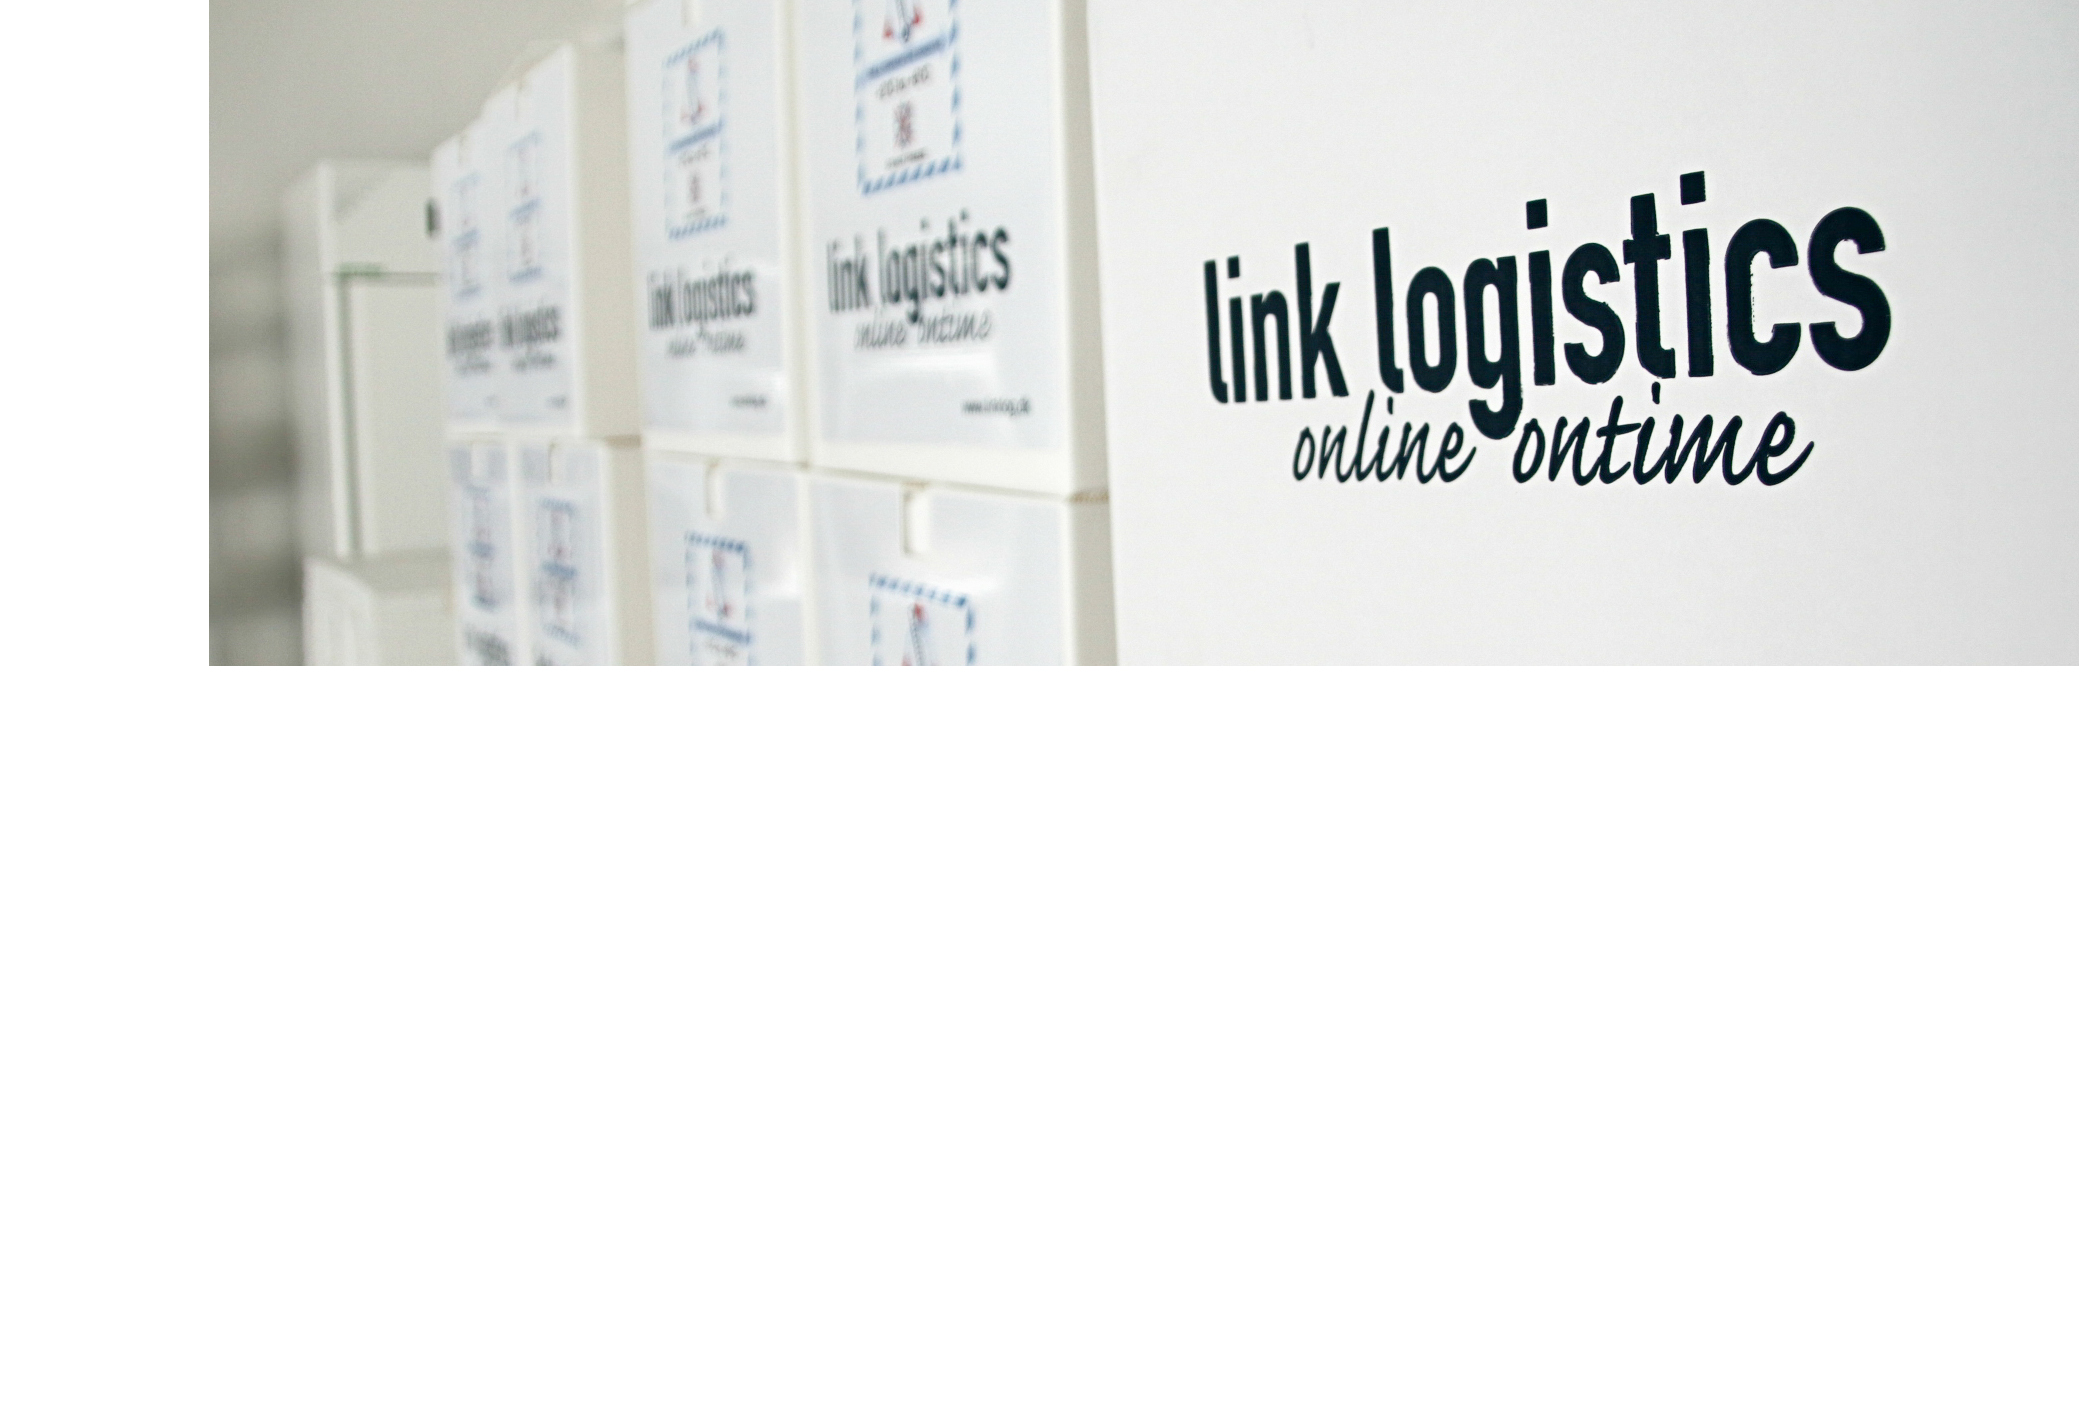 LInk Logistics